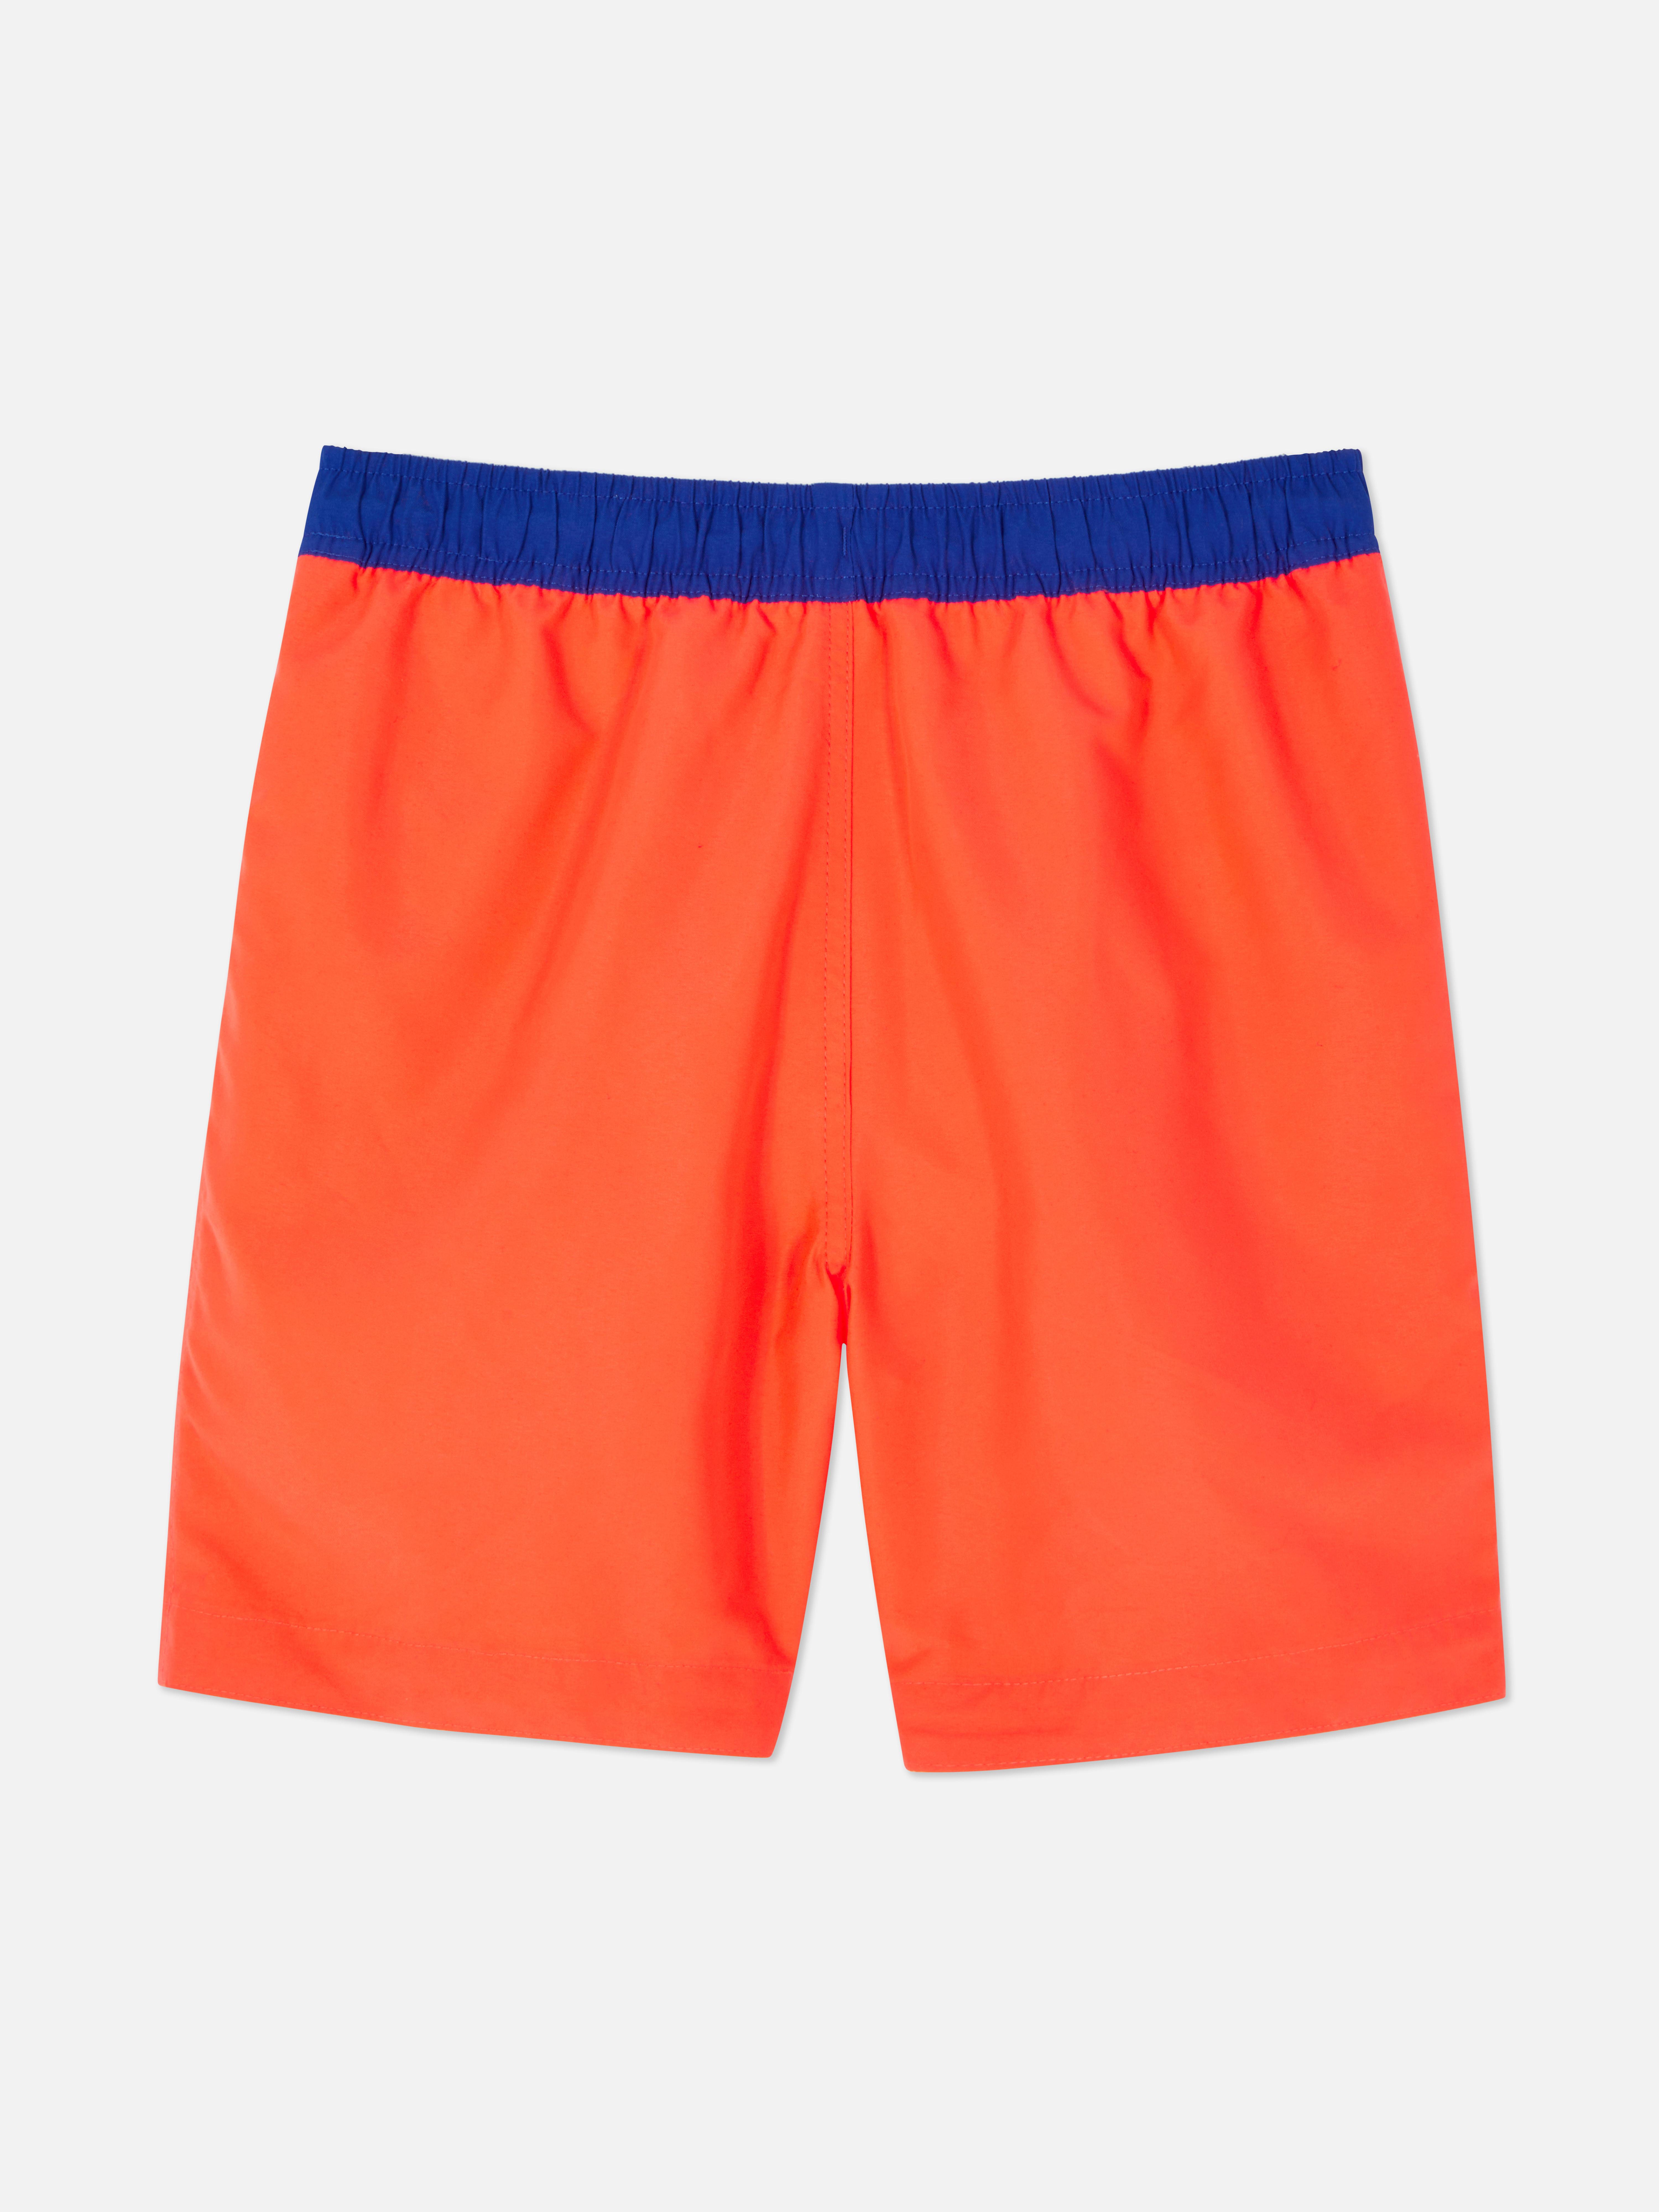 Boys Orange Colour Block Swim Trunks | Primark